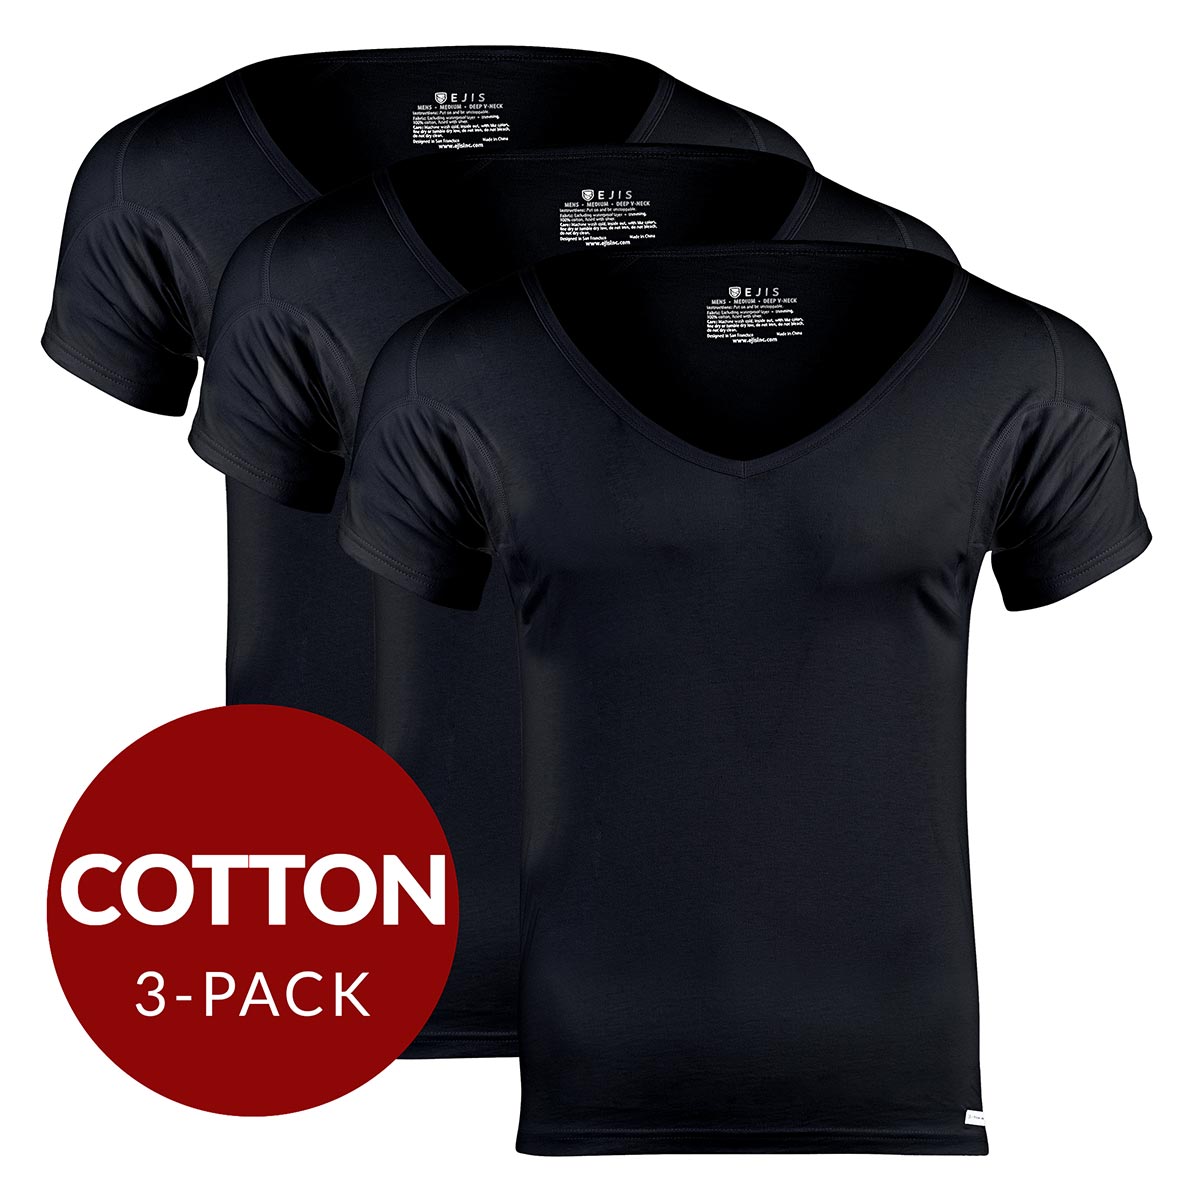 Deep V Cotton Sweat Proof Undershirt For Men - Black 3-Pack - Ejis